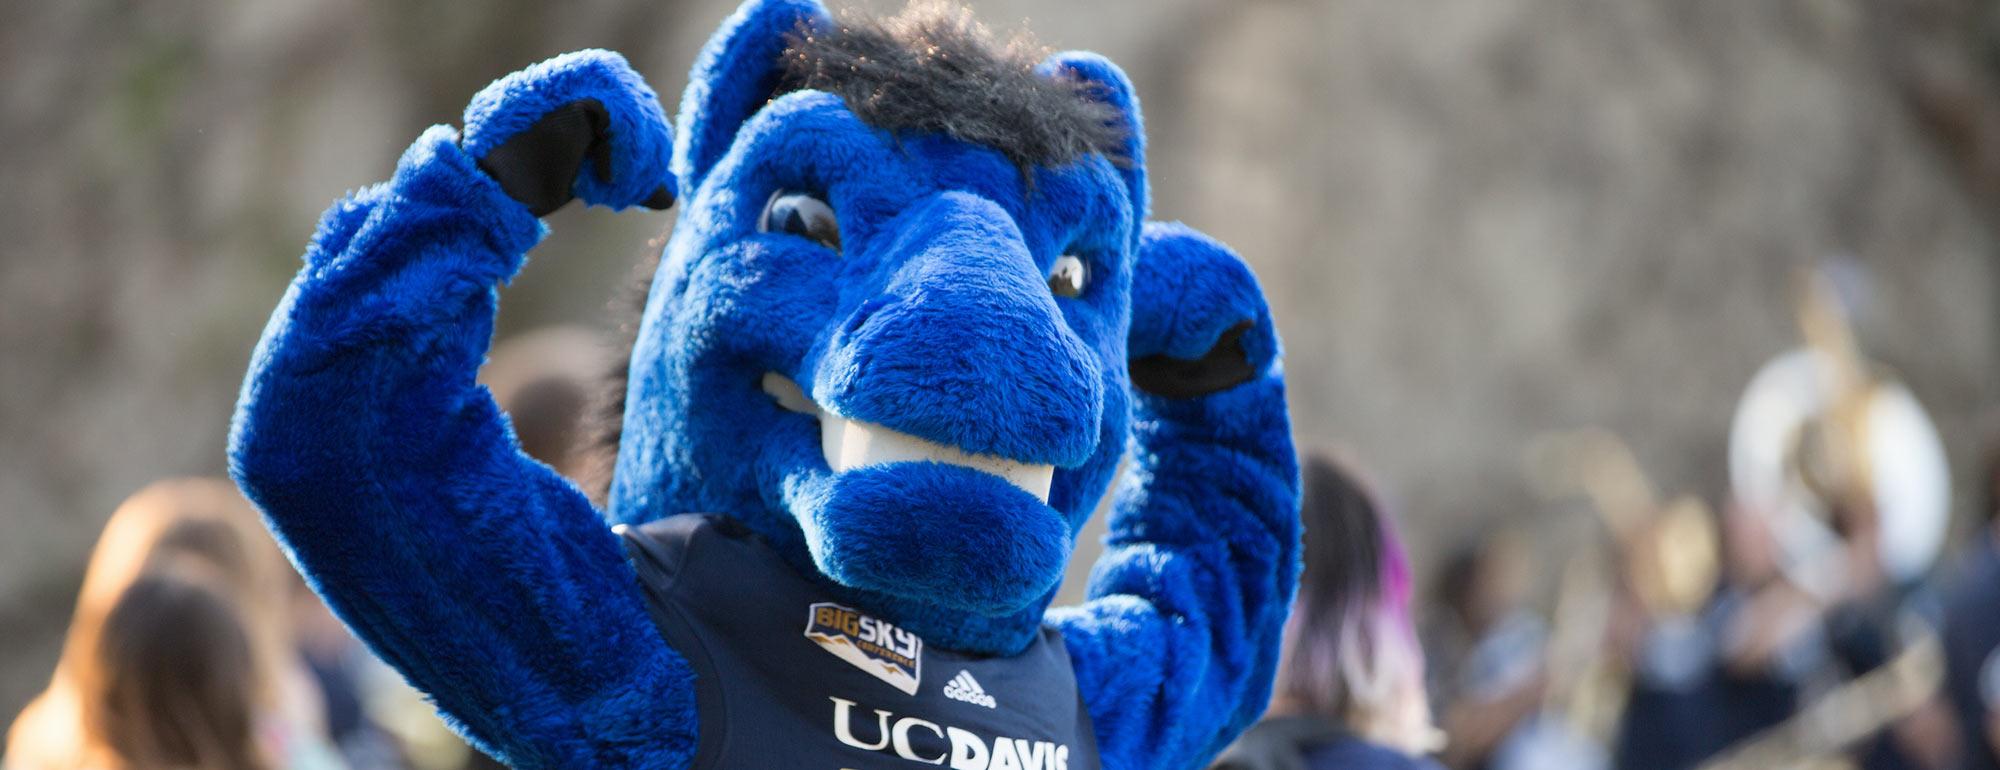 The UC Davis mascot Gunrock flexing at an athletics event